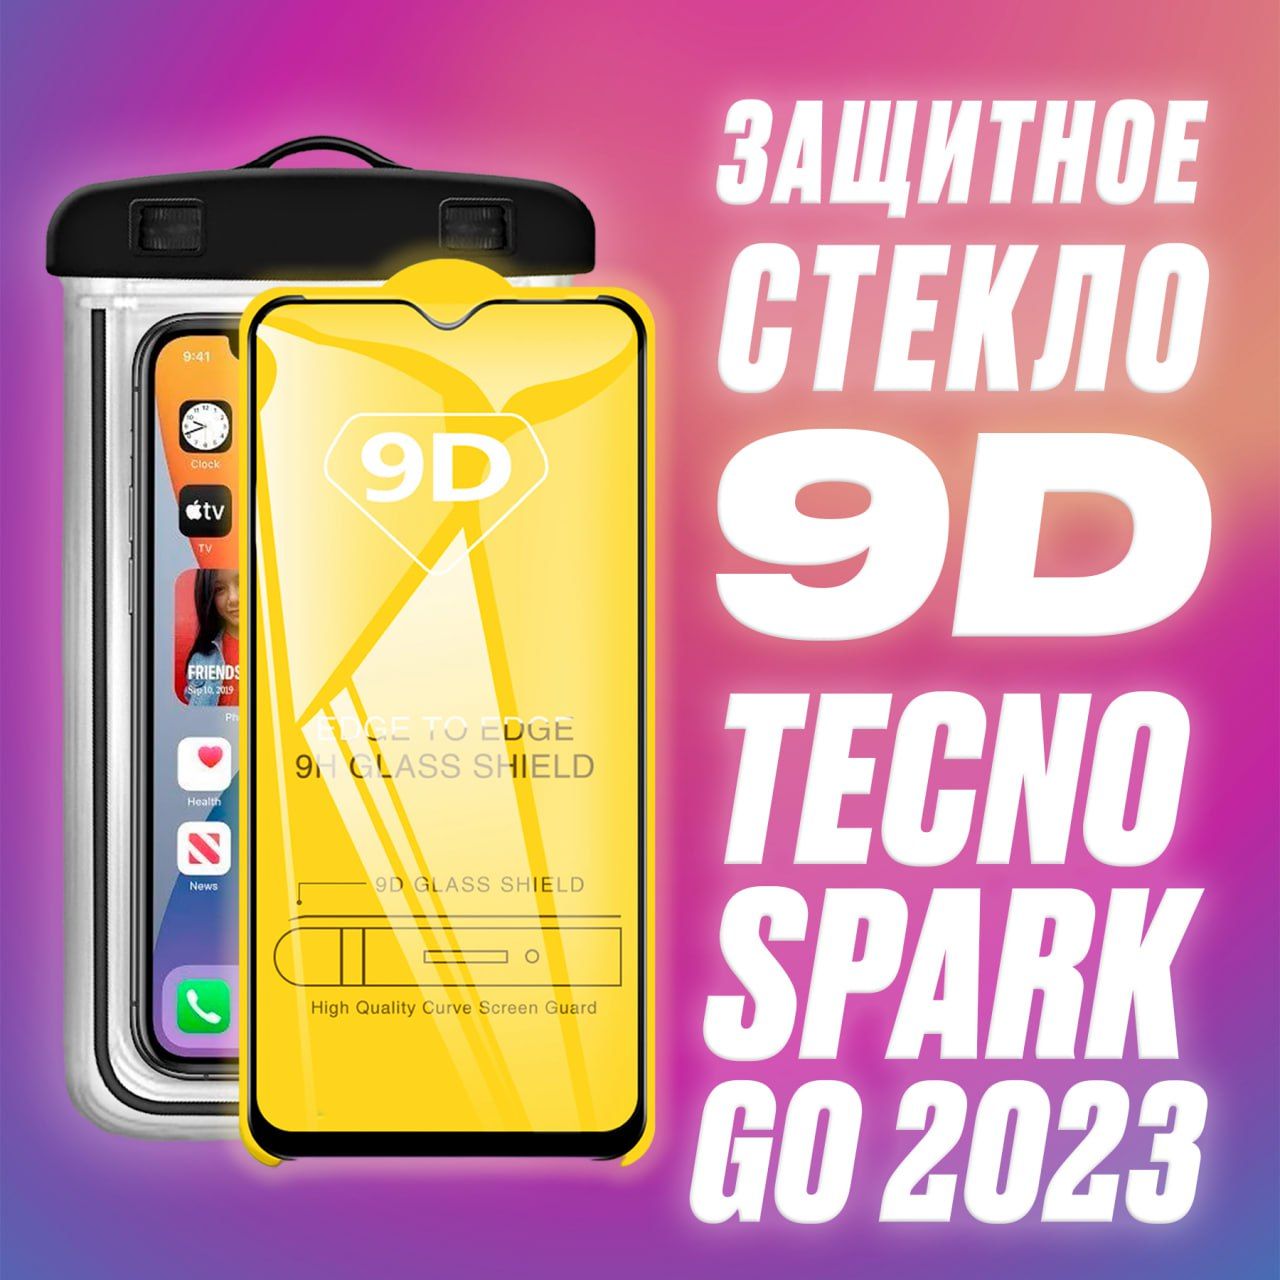 Телефон tecno go 2023. Чехлы для телефона Техно Спарк гоу 2023. QR код телефона Tecno go Spark 2024.